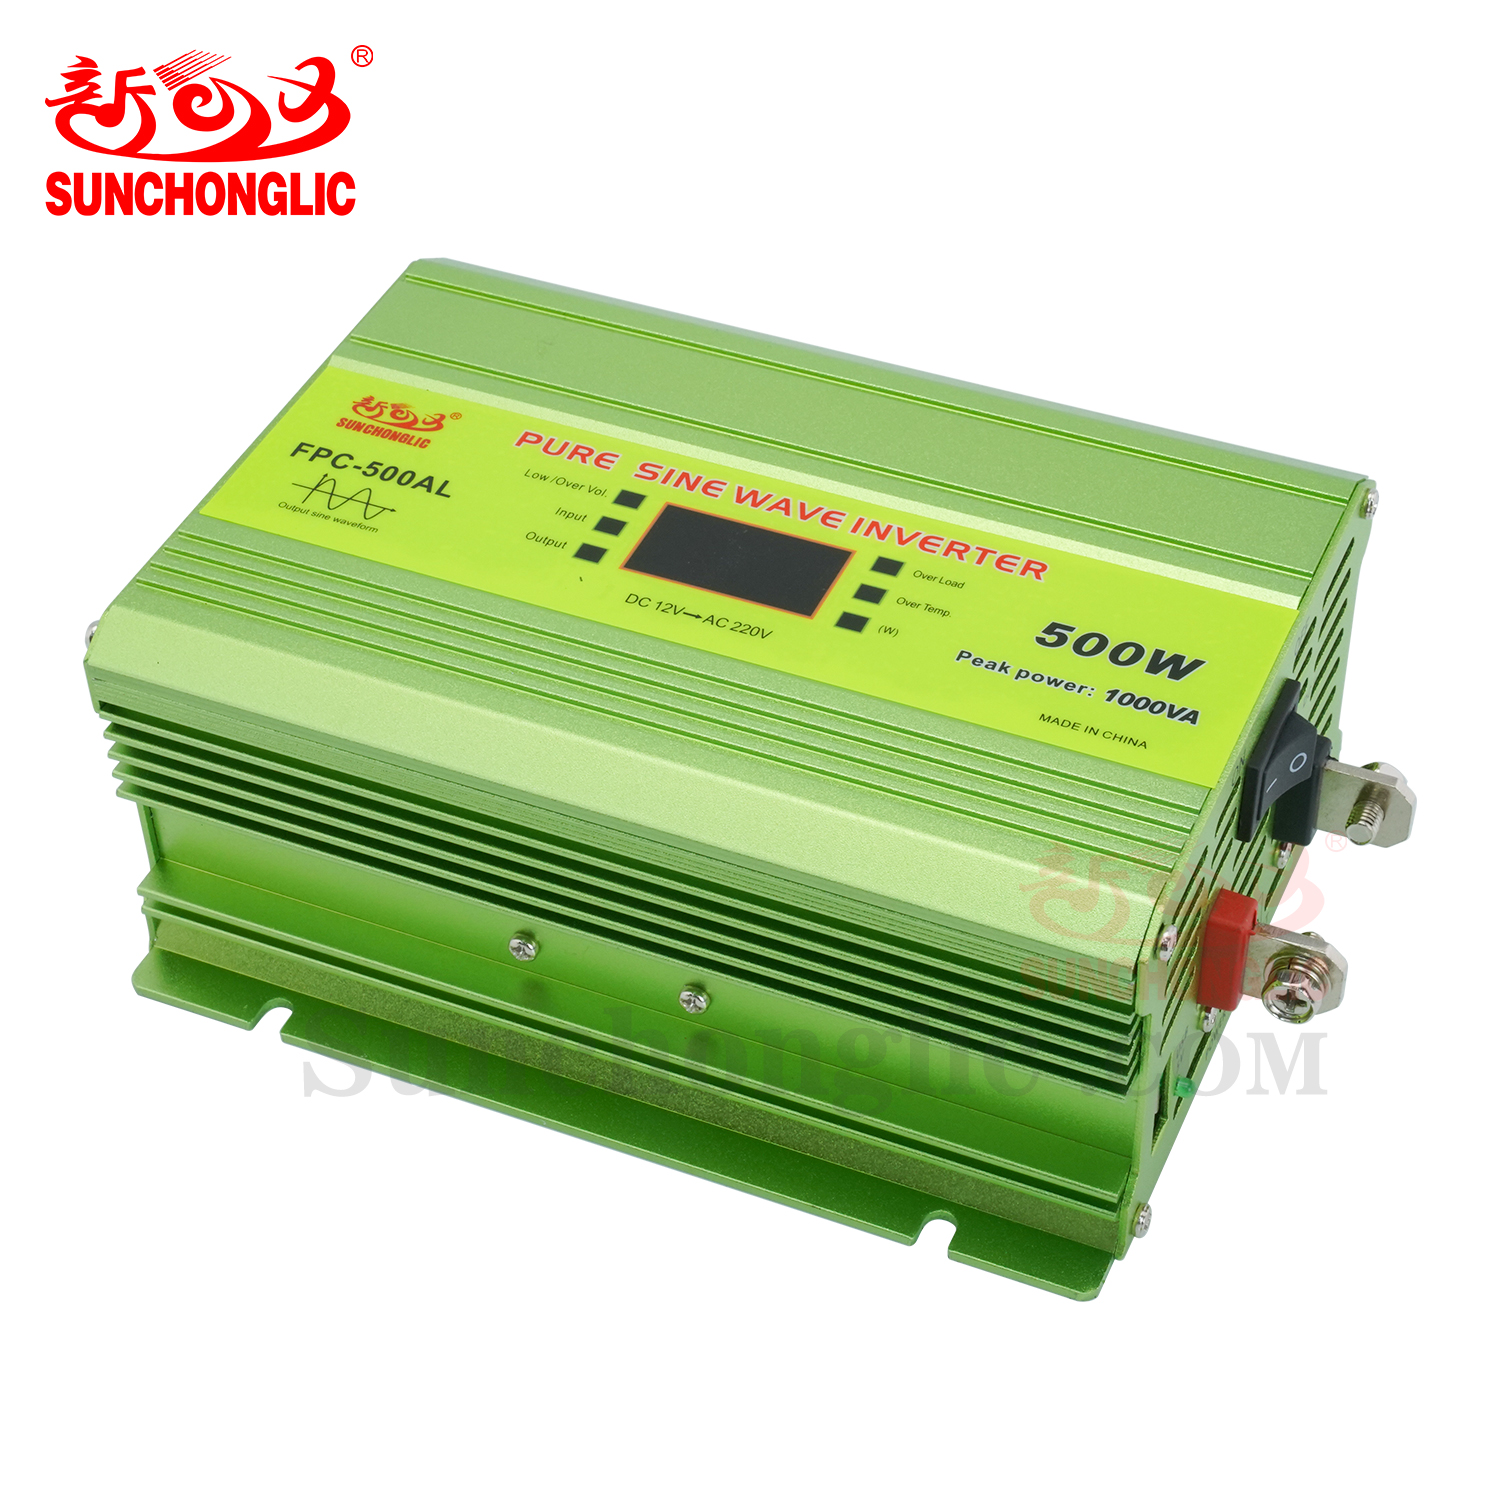 FPC-500AL - Pure Sine Wave Inverter - Foshan Sunchonglic Electric Appliance  Co., Ltd.